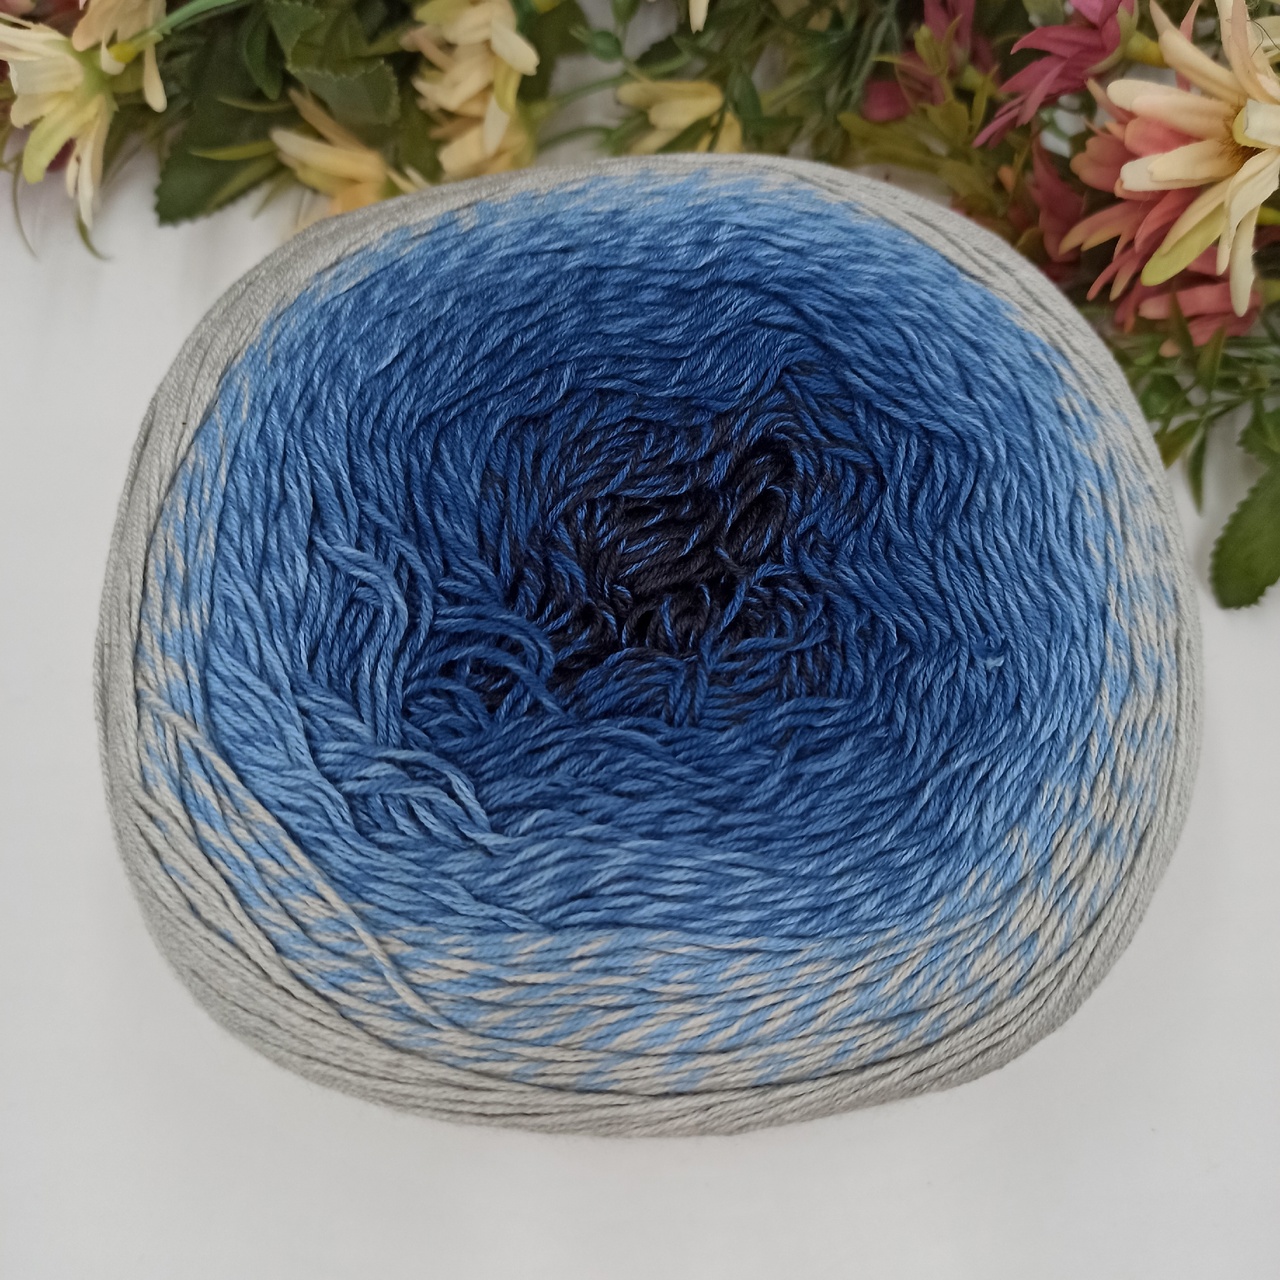 Хлопок секционного окрашивания  Flowers Yarn art 271, Турция Серый-Голубой-Синий-Темно синий-